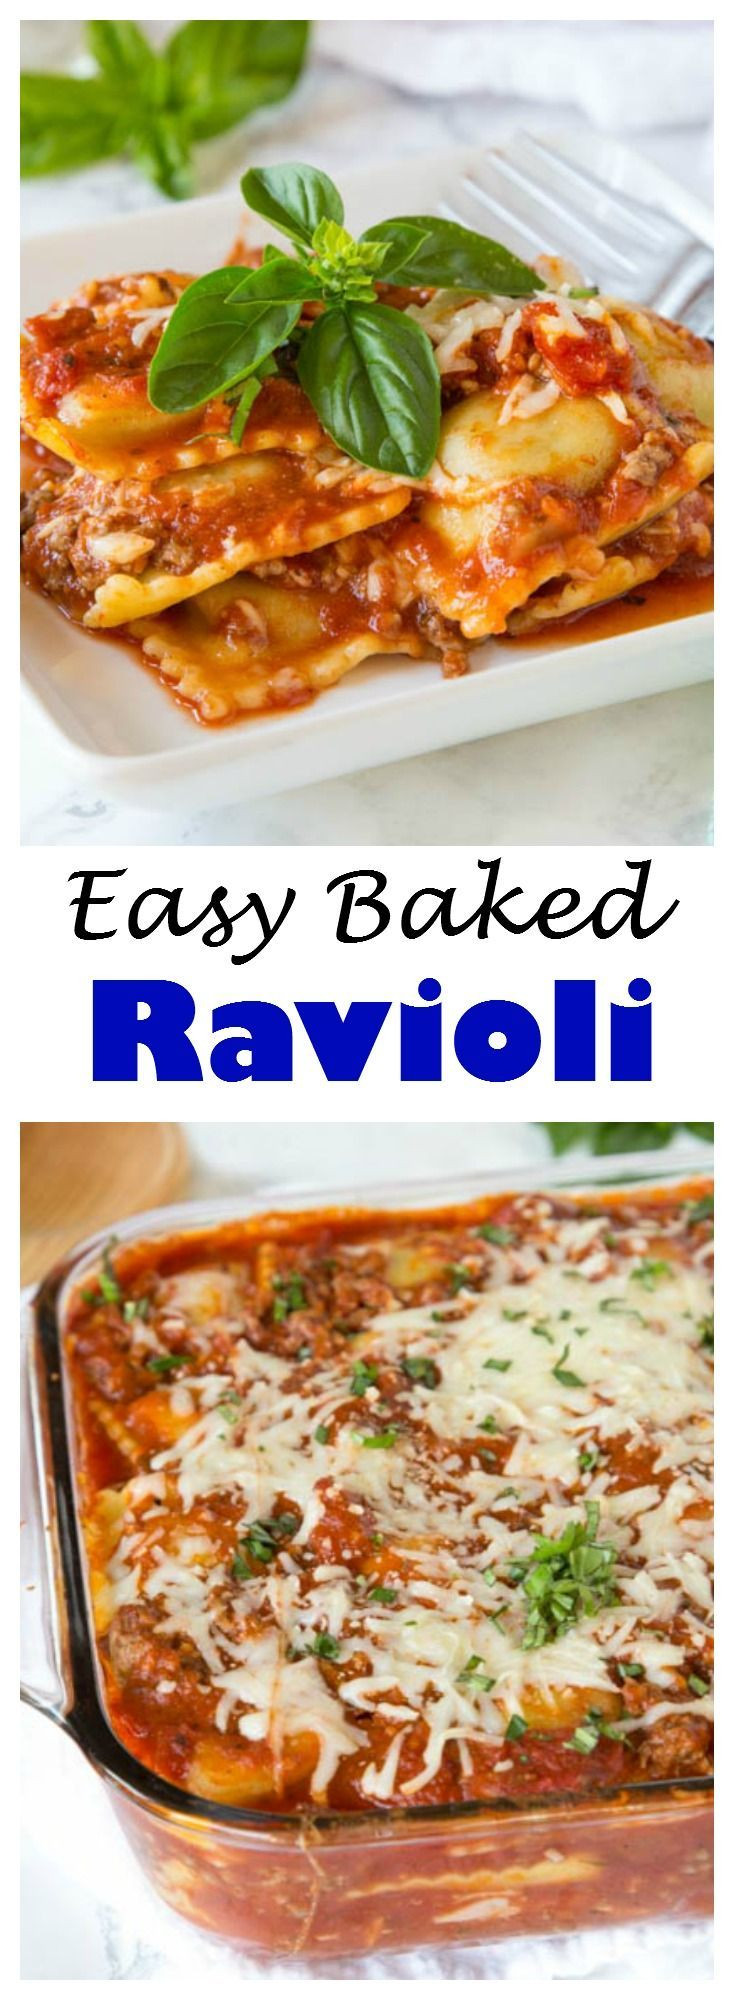 Easy Delicious Dinner Recipes
 Best 25 Baked ravioli ideas on Pinterest